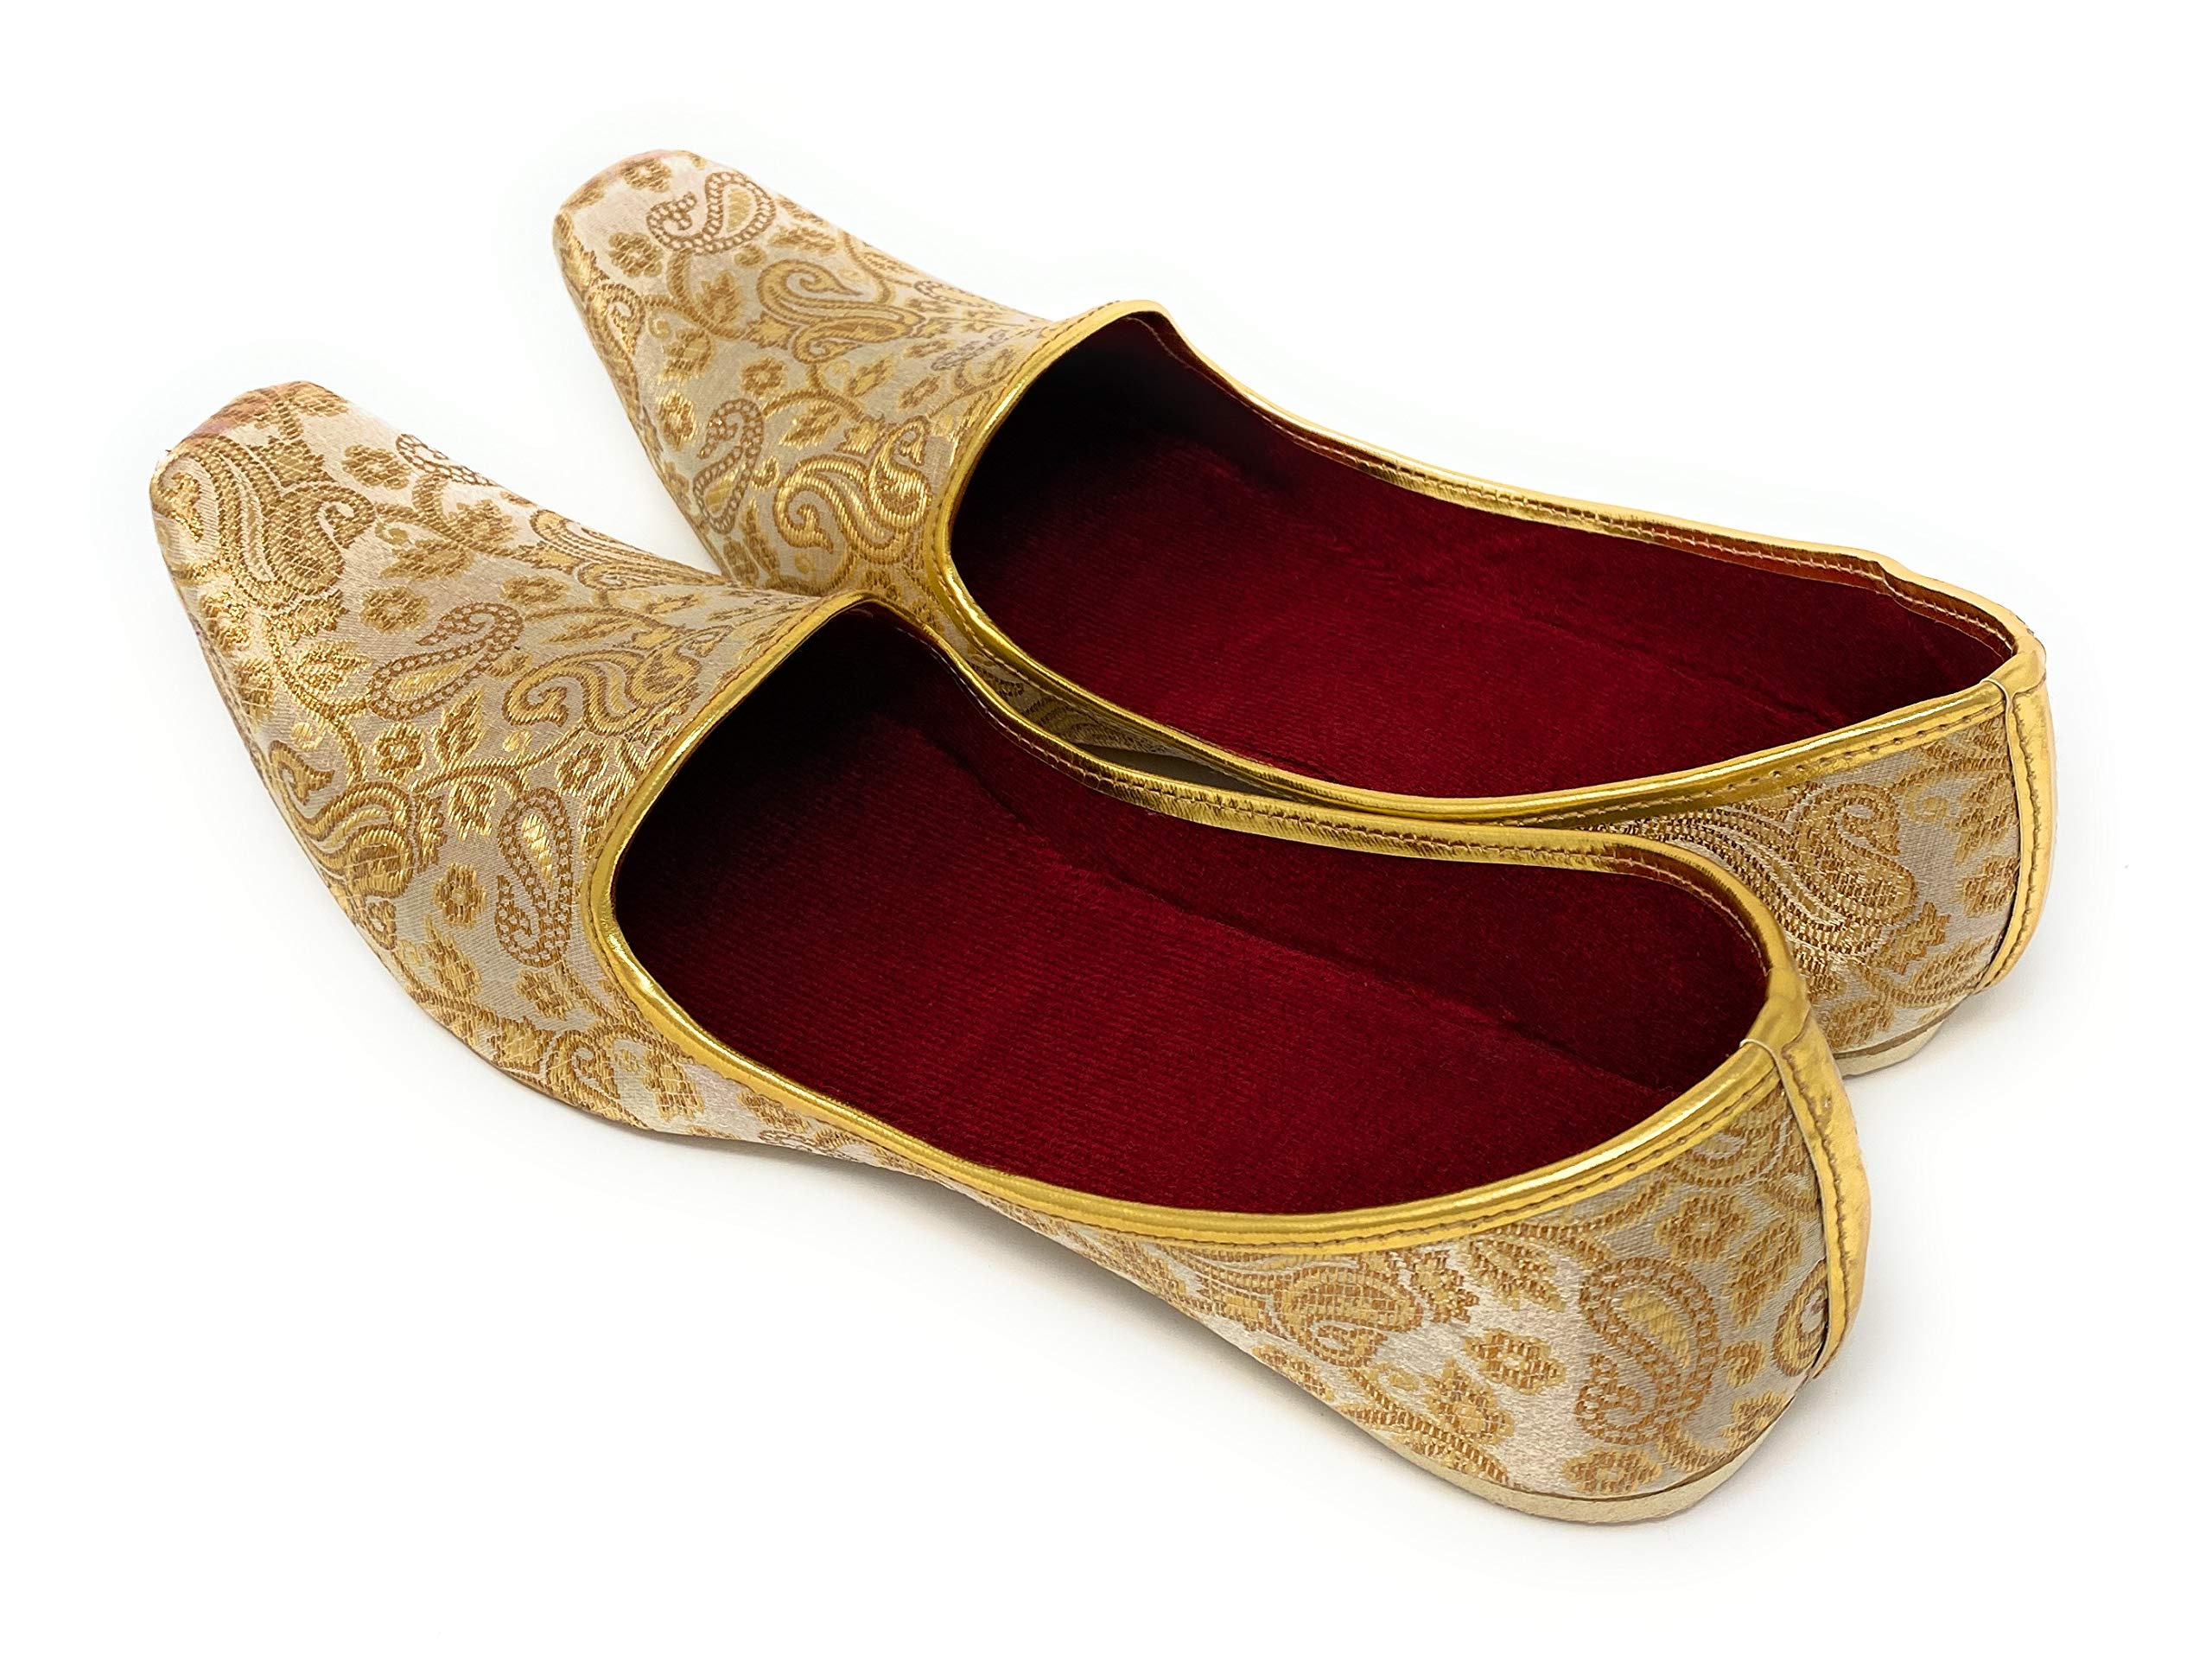 BombayFlow RANVEER Punjabi Jutti Indian Flats Handmade Shoes - Khussa Shoes, Indian Wedding, Sherwani, Kurta, Mojari Shoes